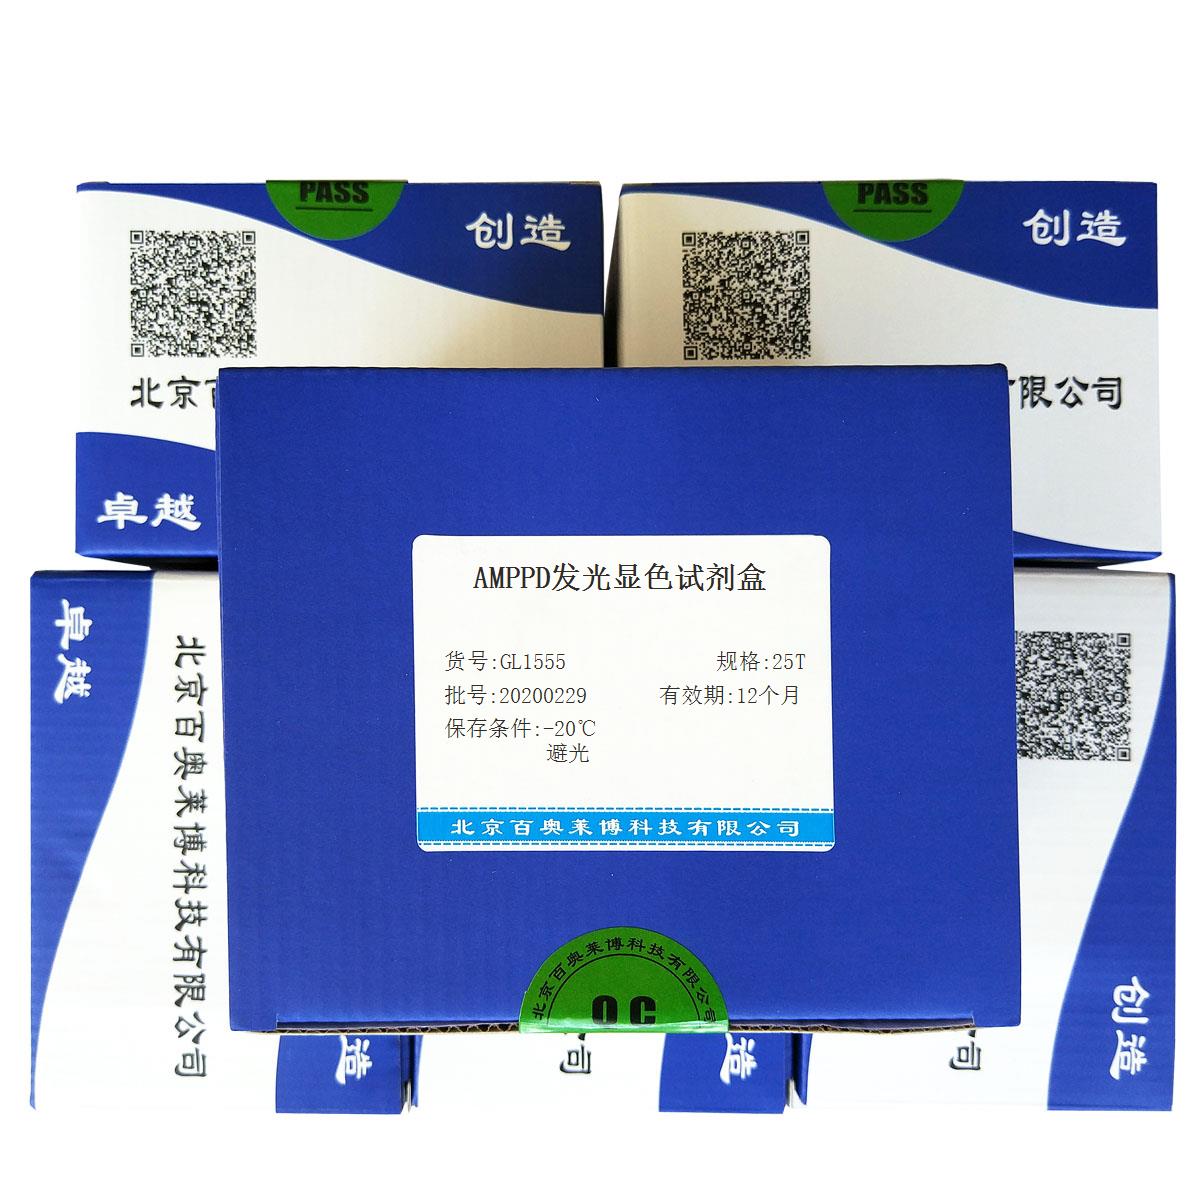 AMPPD发光显色试剂盒北京供应商